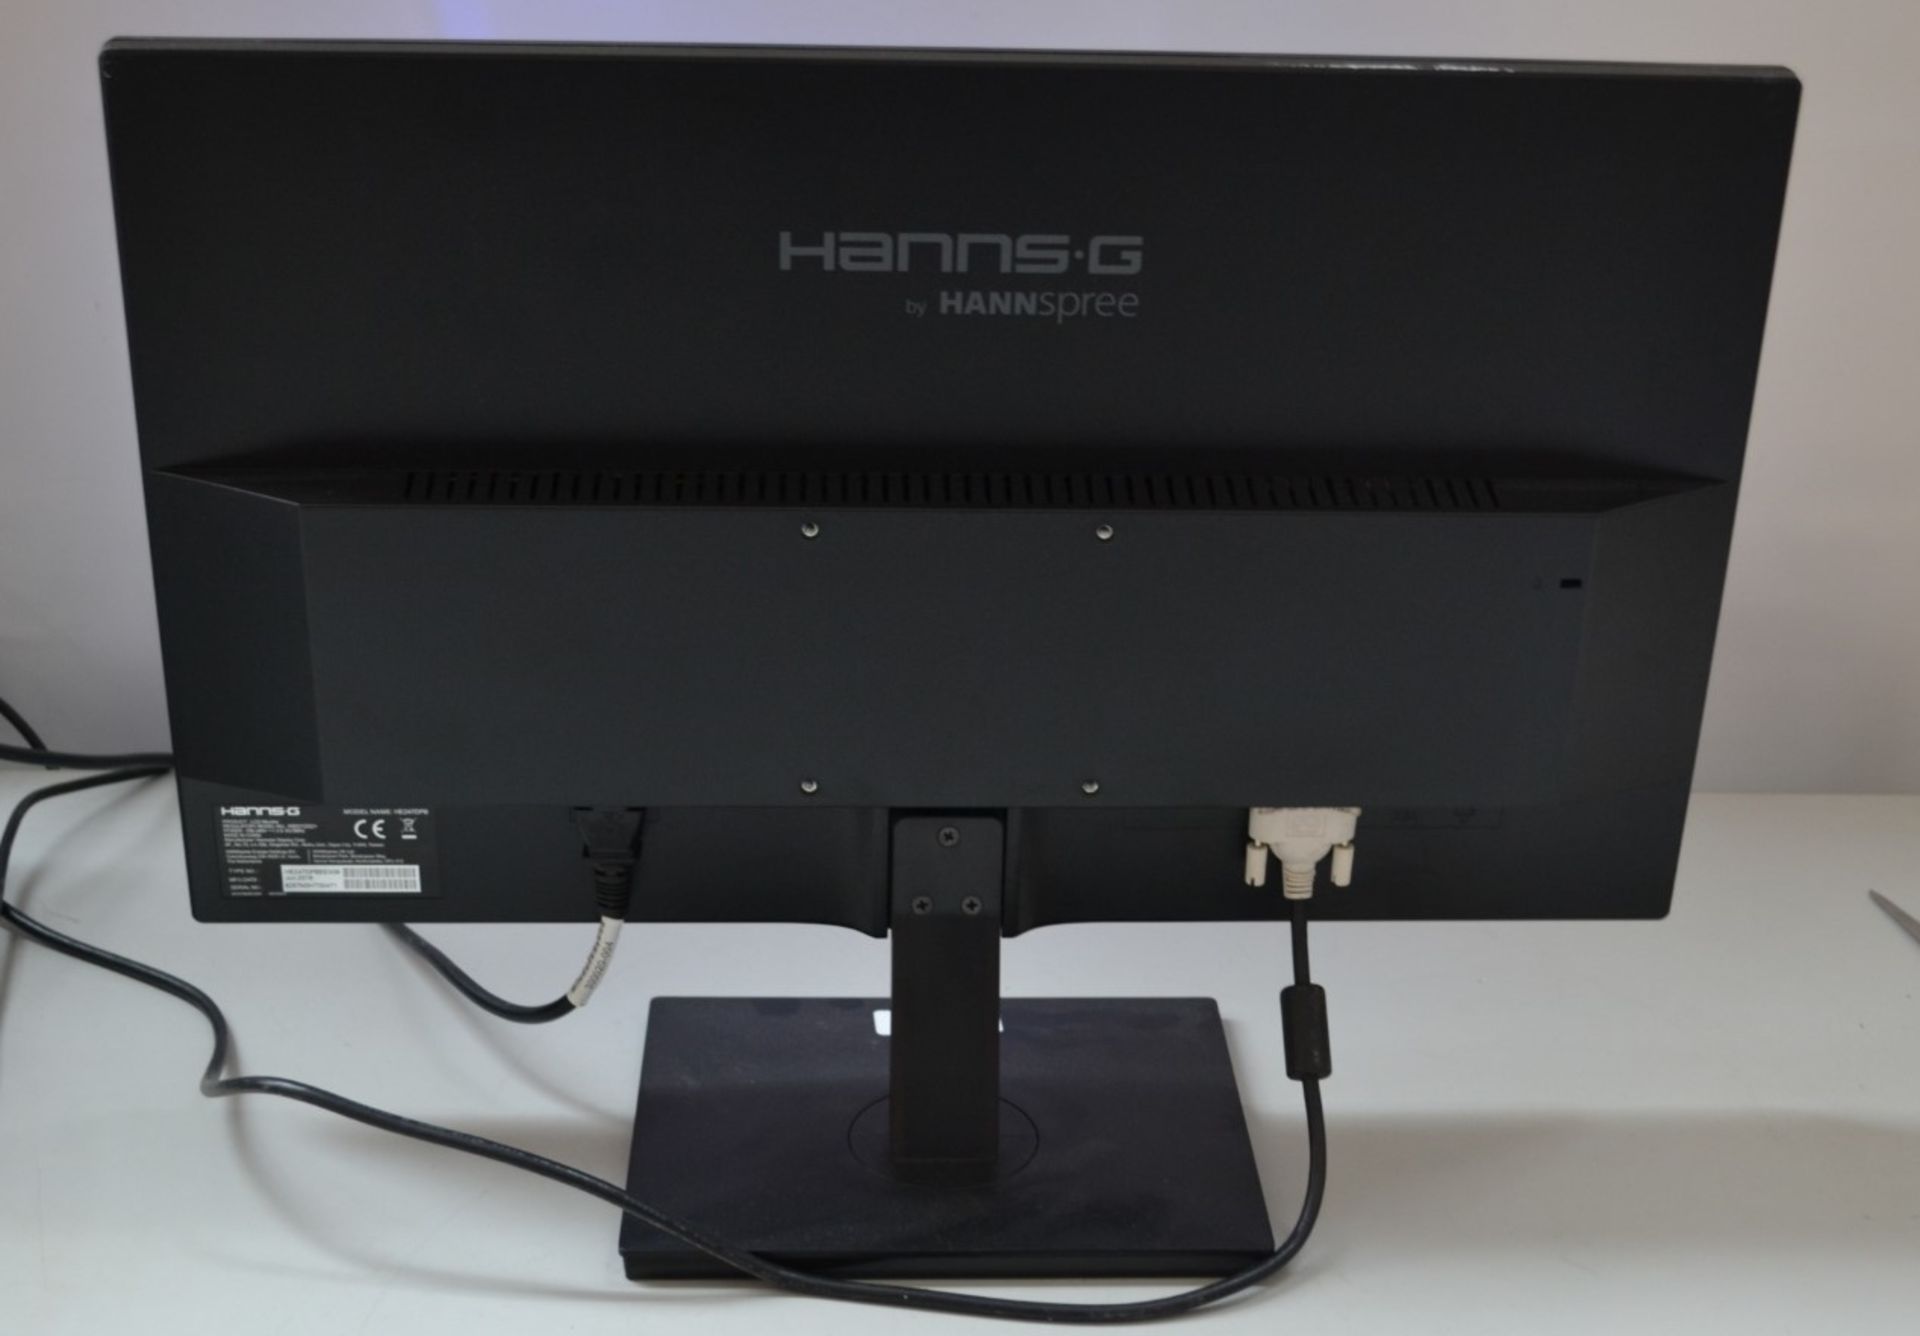 1 x HannsG HE247DPB 24" PC Monitor - Ref J2247 - Image 3 of 3